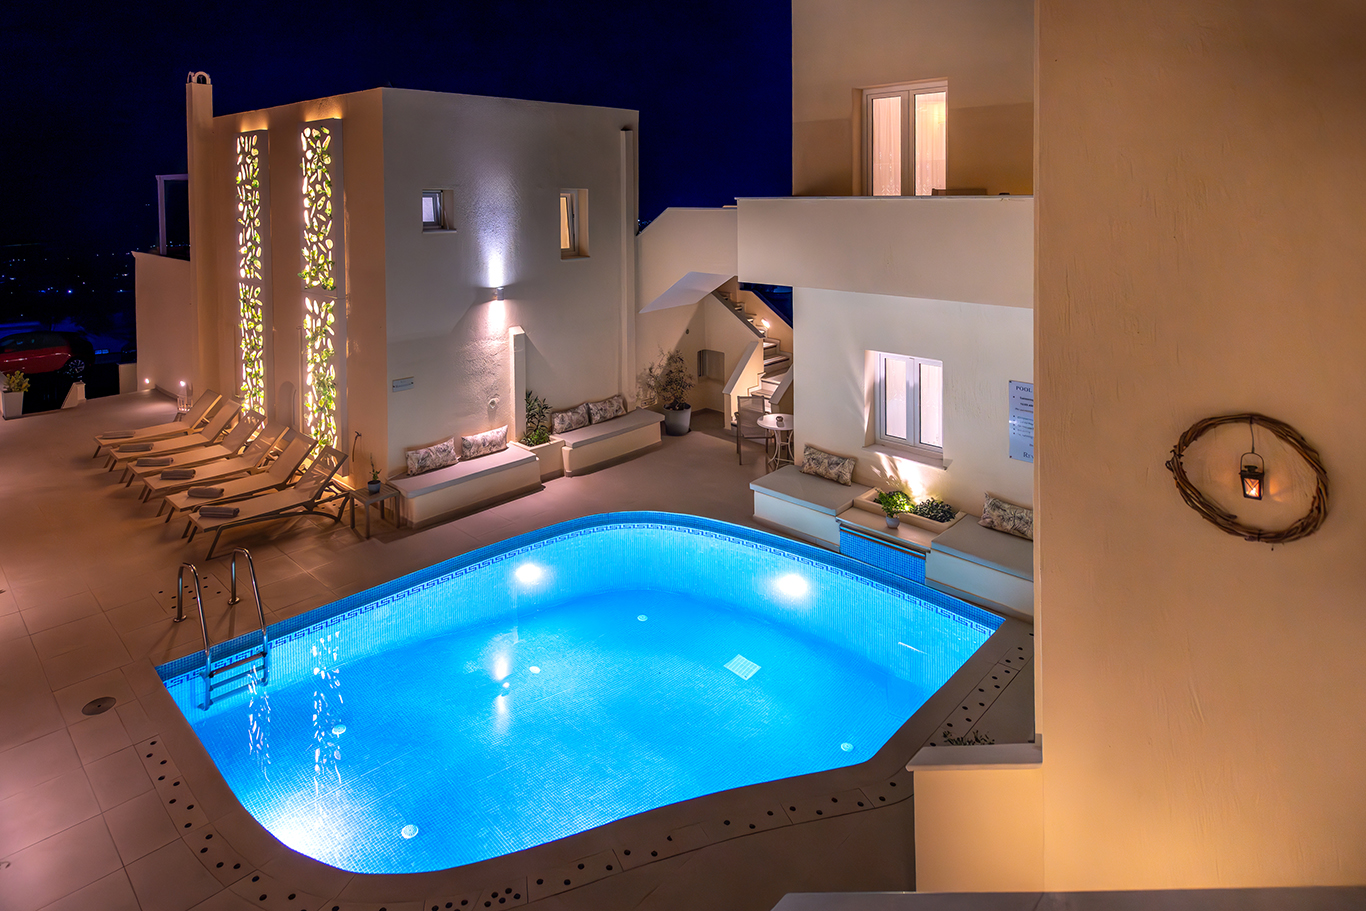 Reverie Santorini Hotel, accommodation in Firostefani, Rooms, Studios, Suites book online